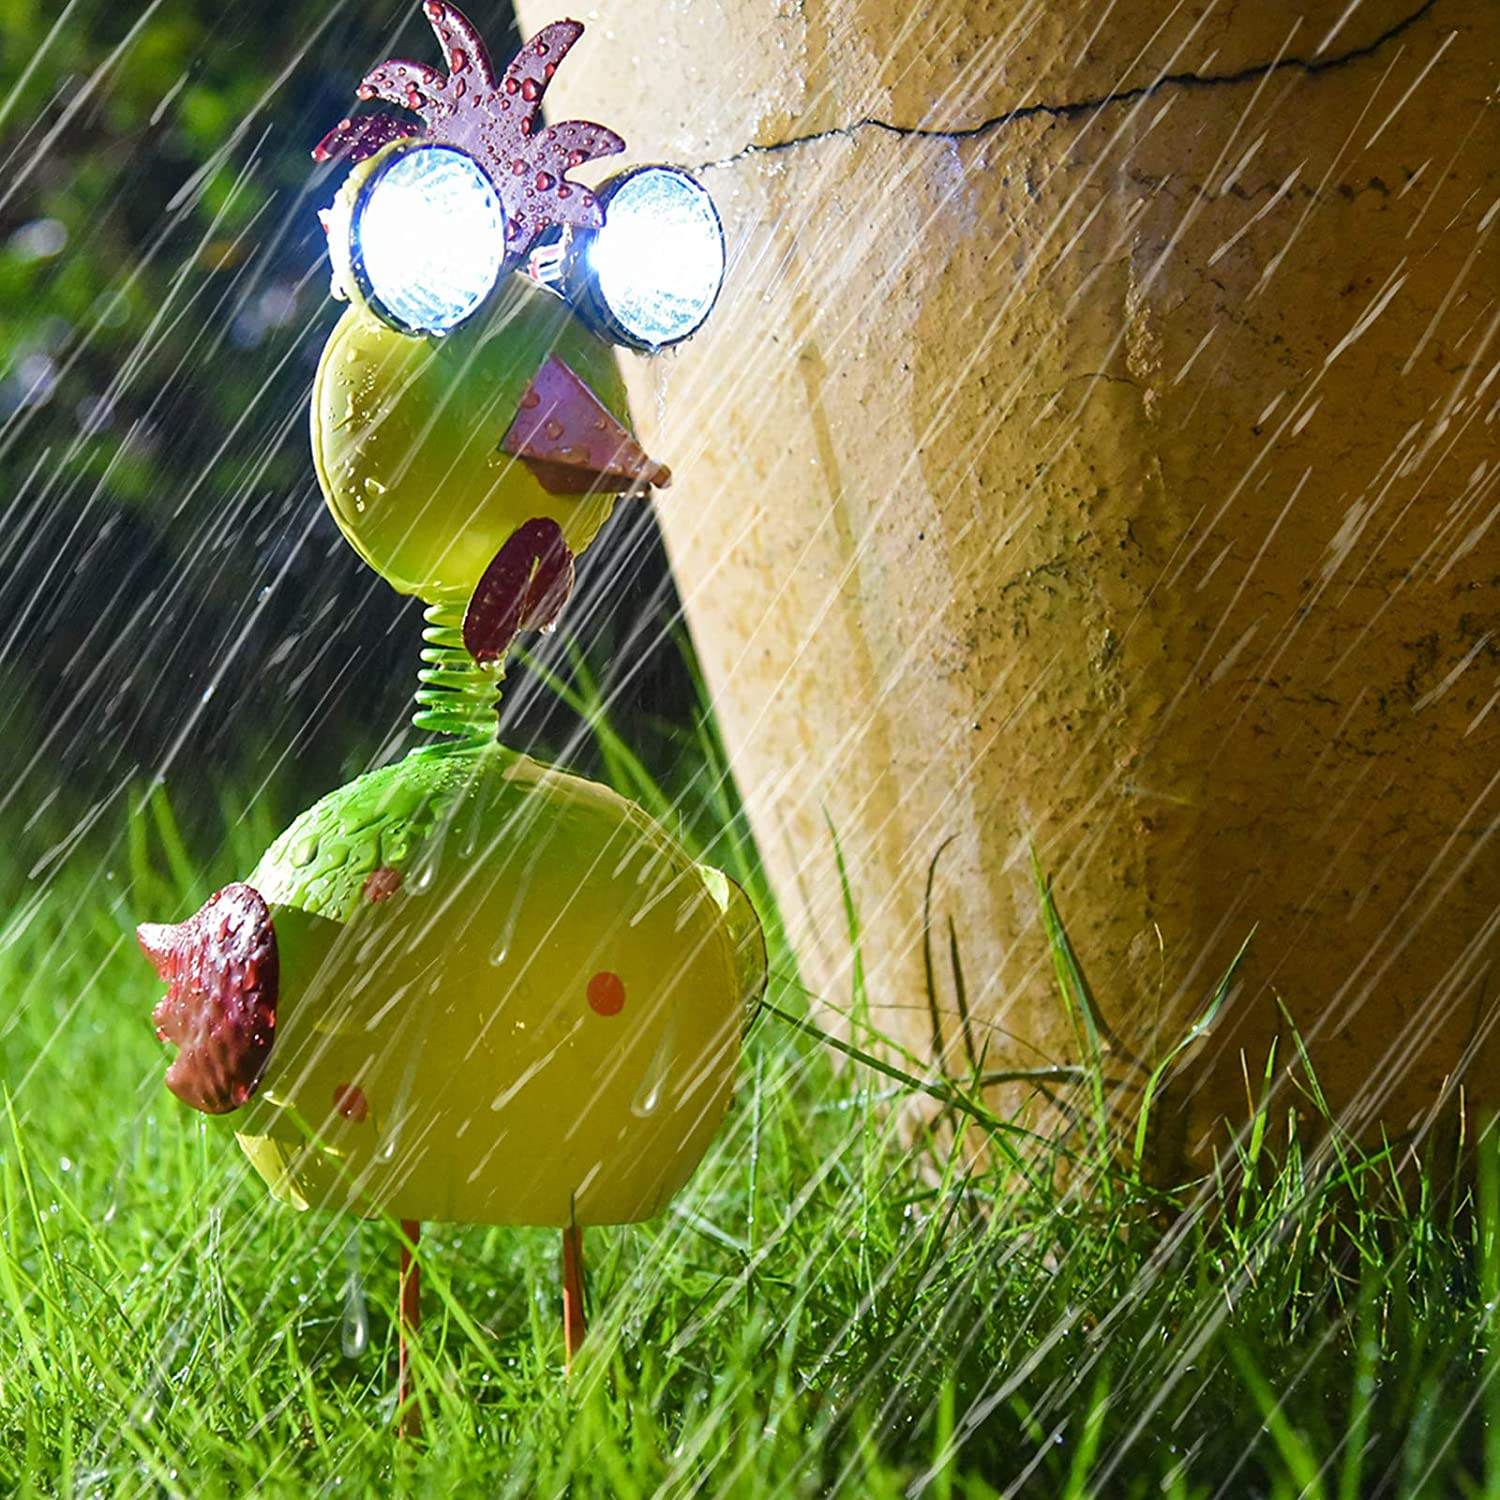 Outdoor Waterproof Led Metal Patio Art Solar Farm Animal Chick Lights For Lawn Backyard Pathway Decor